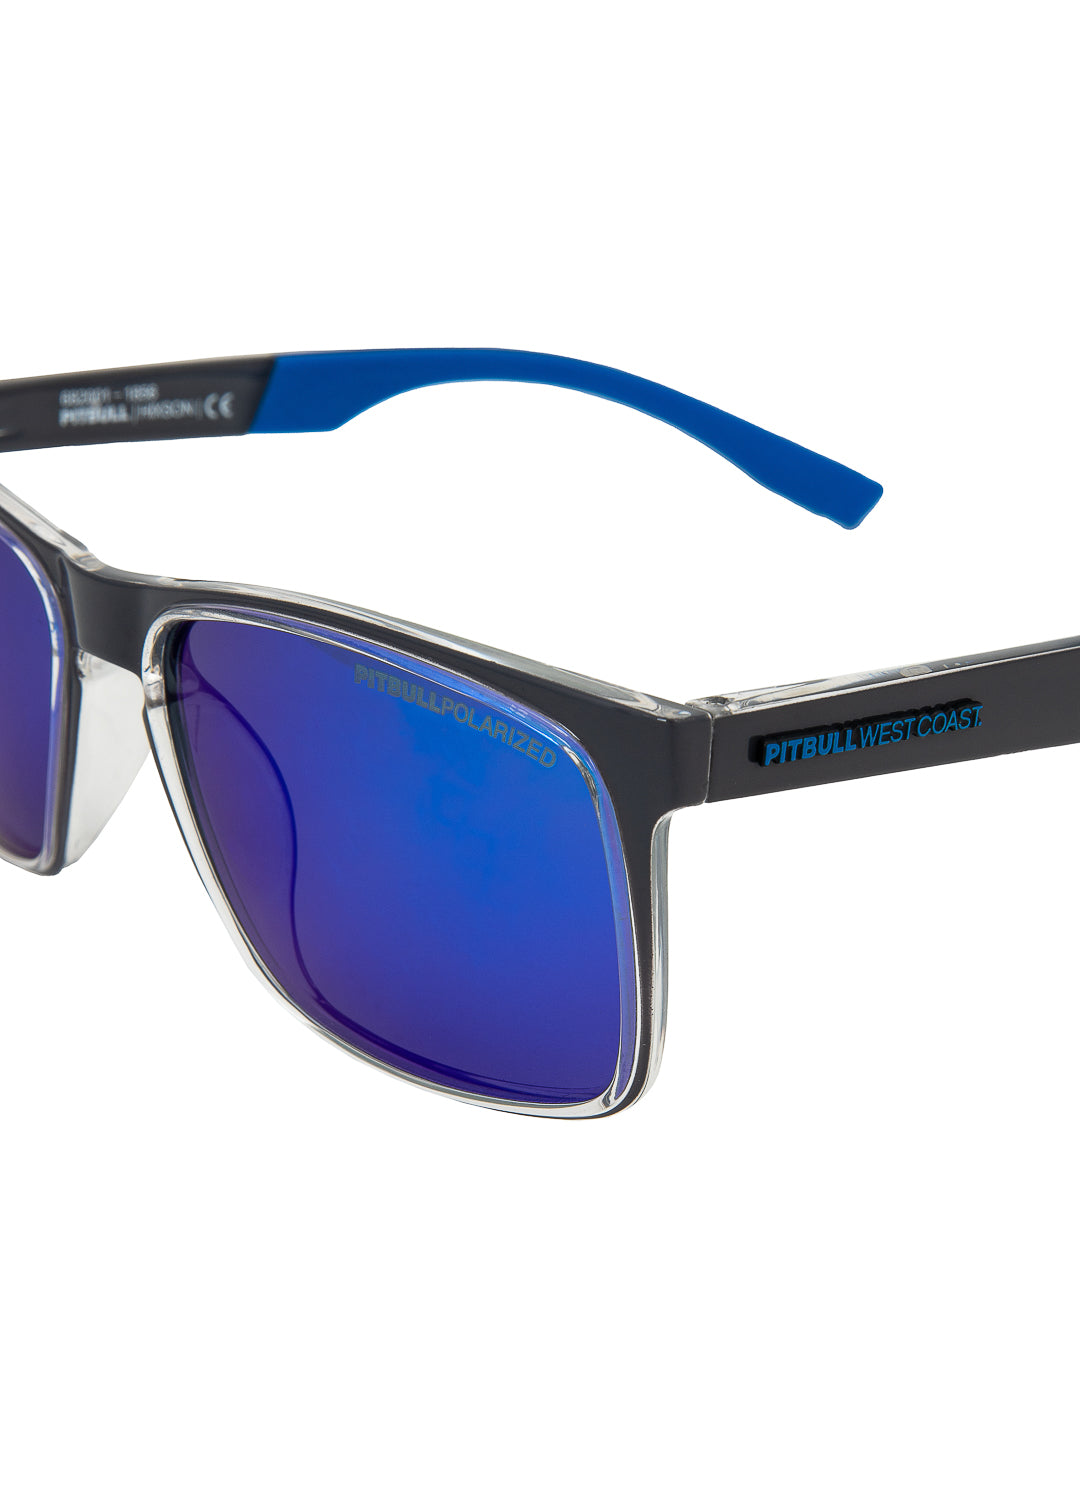 Sunglasses Grey/Blue HIXSON.